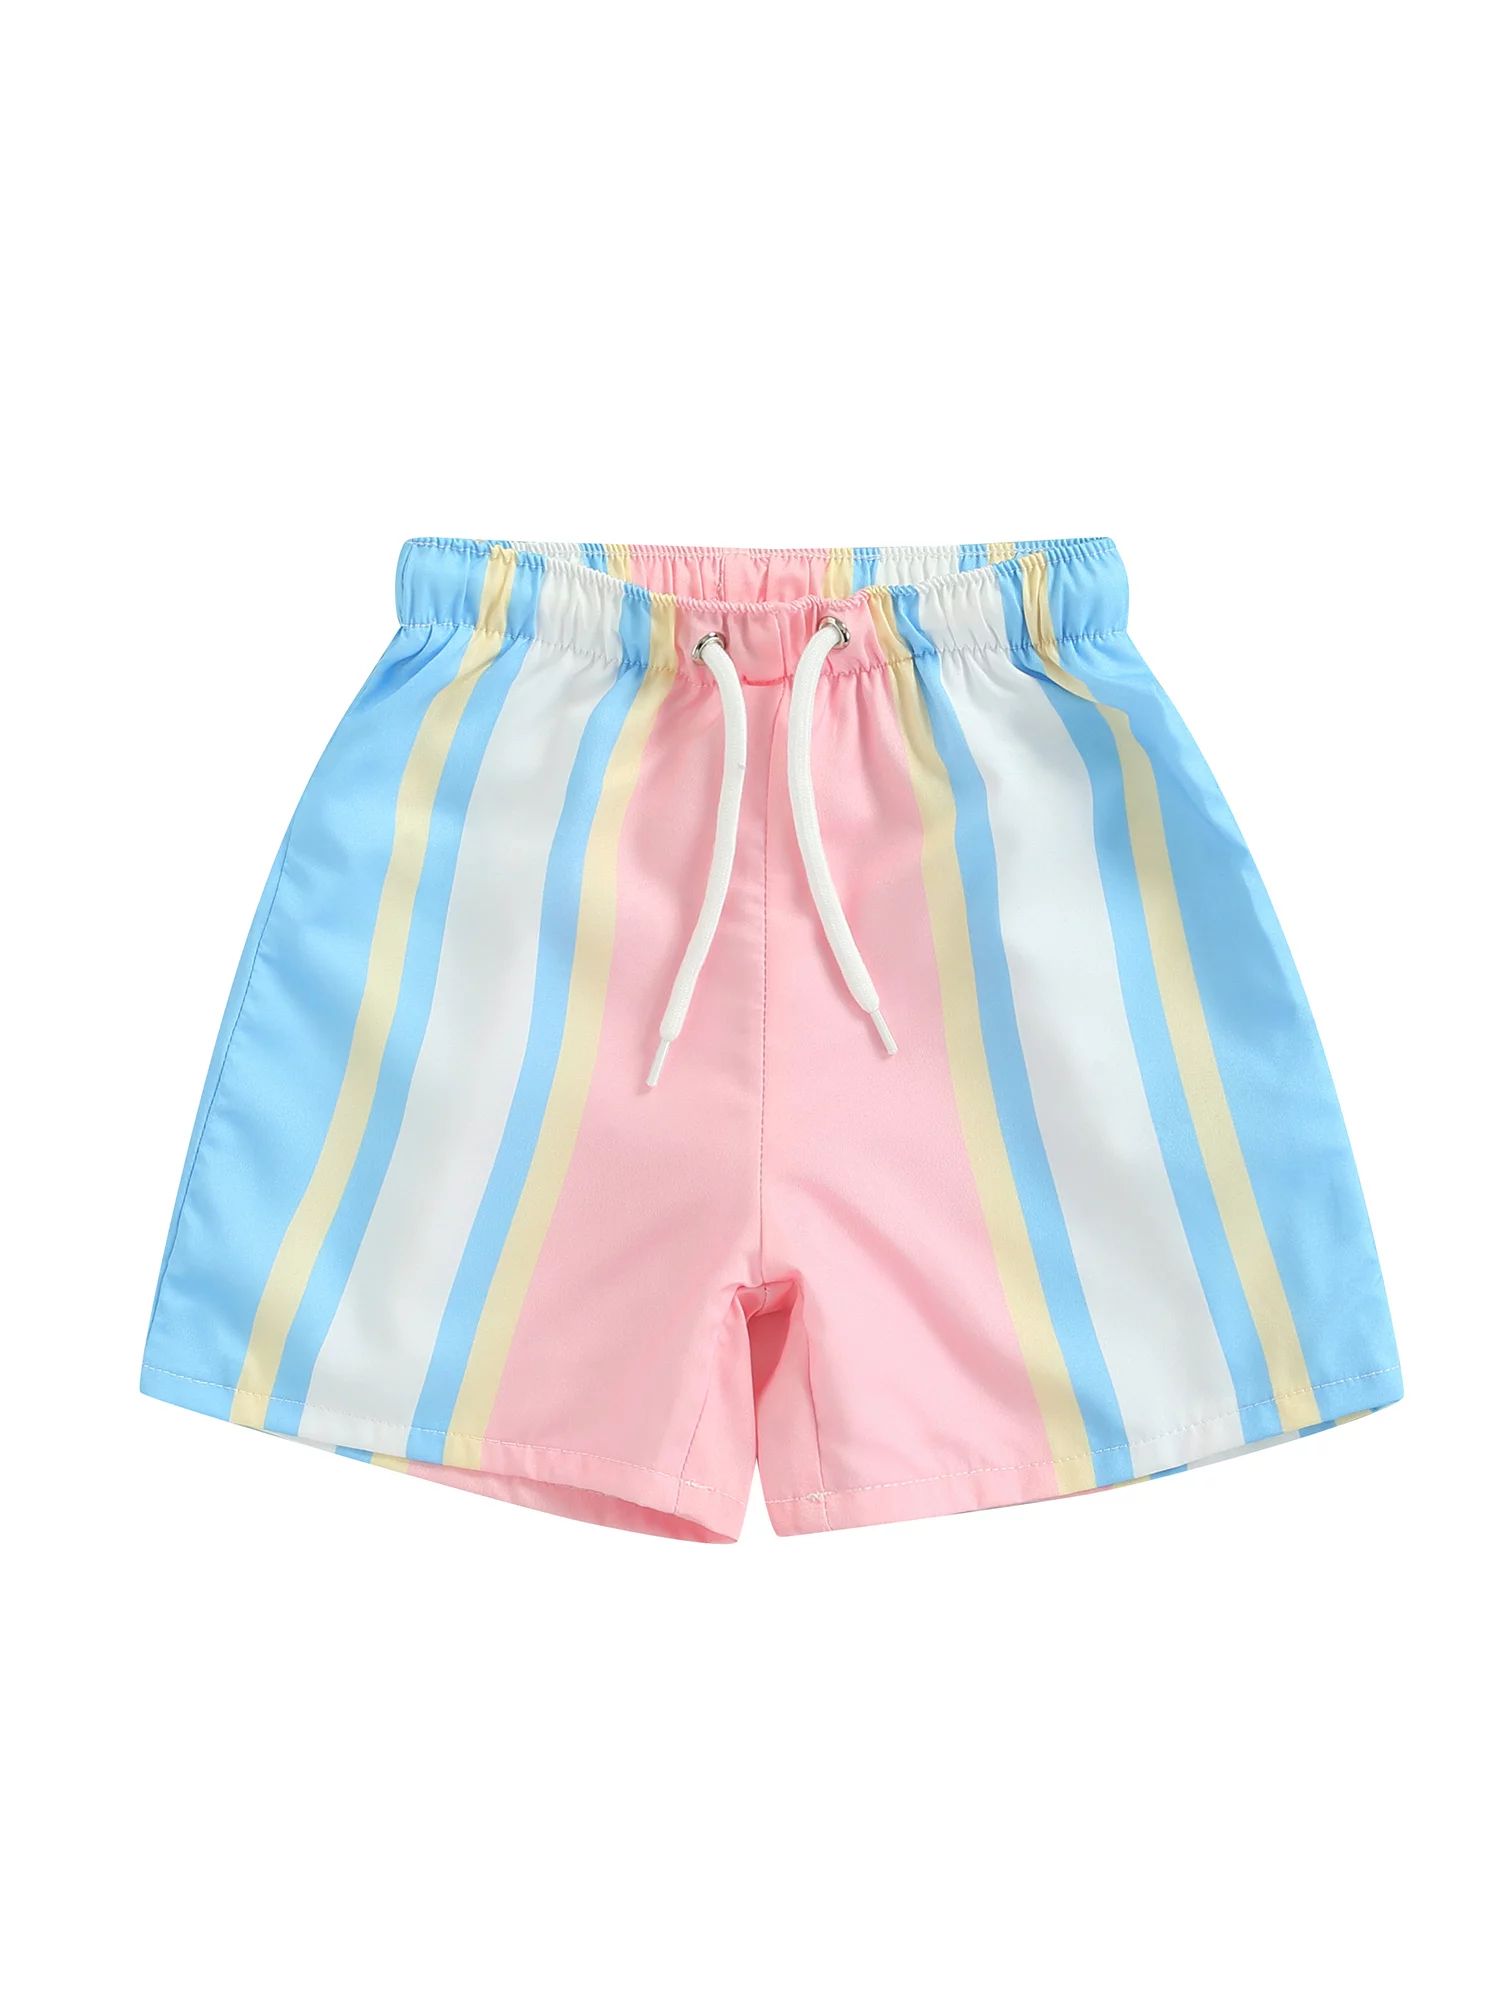 Kids Toddler Boys Swimwear Casual Beach Shorts Summer Printed Drawstring Waist Swim Trunks 2-6T -... | Walmart (US)